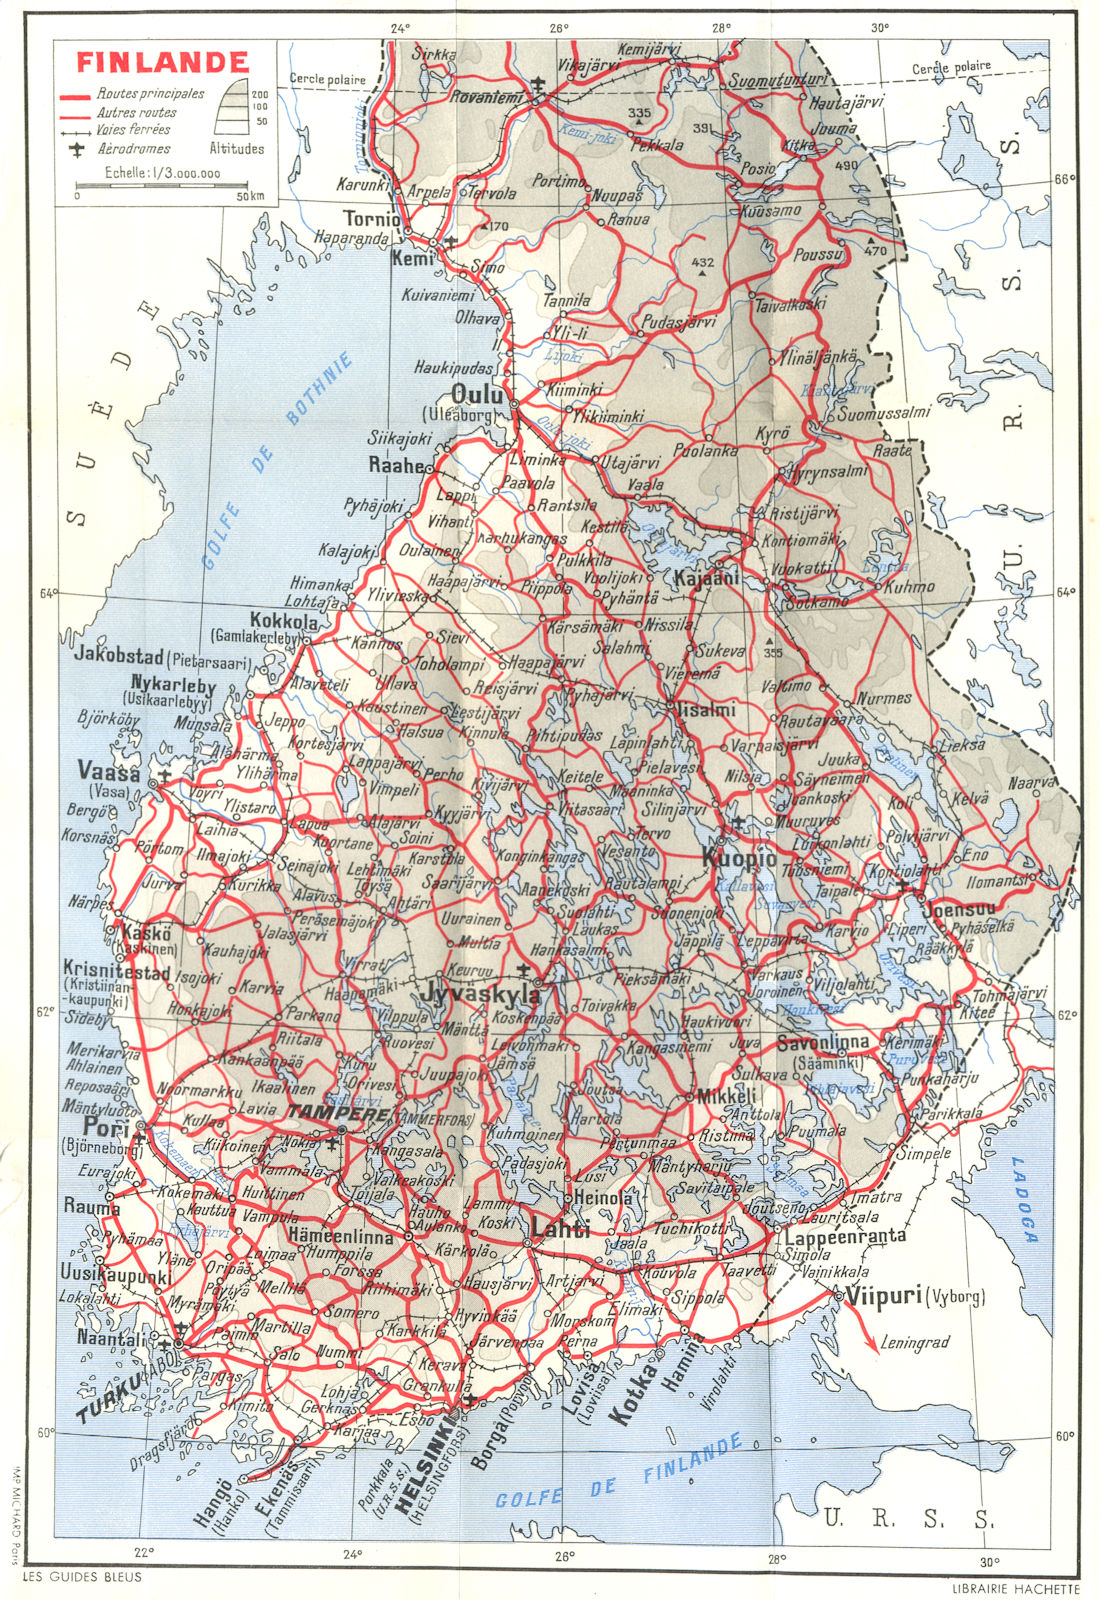 FINLAND. Finlande 1955 old vintage map plan chart